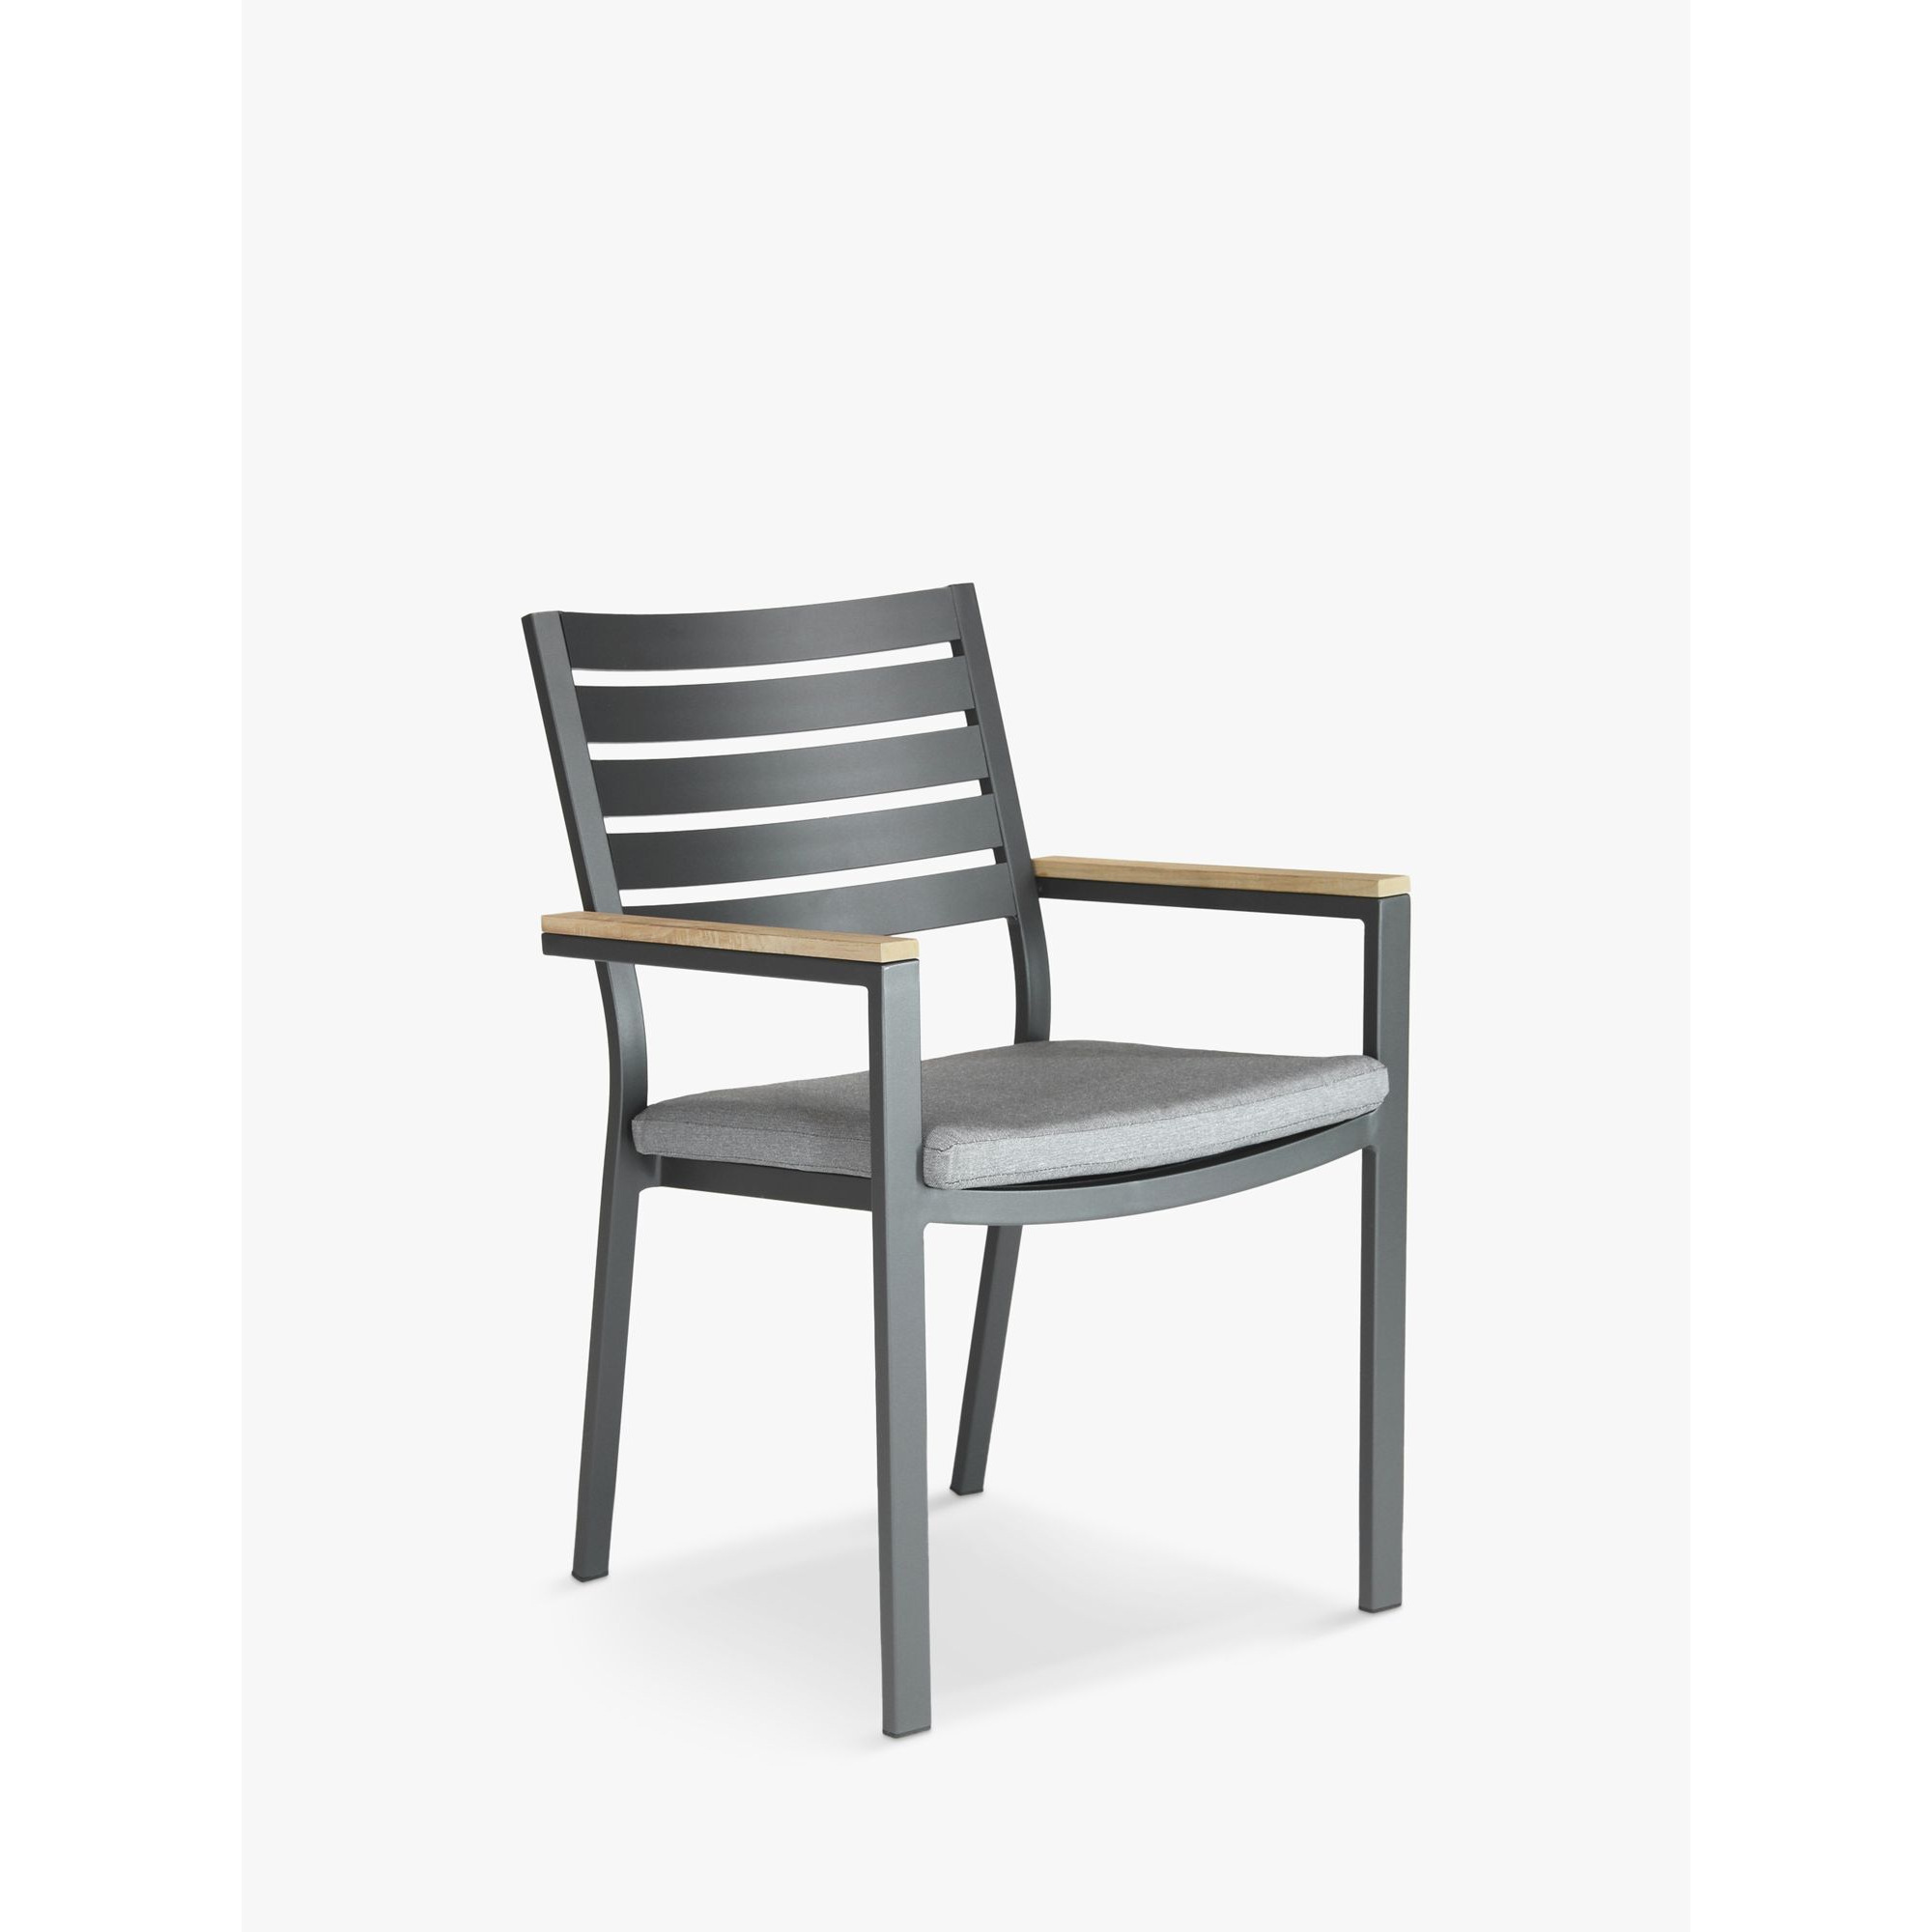 KETTLER Elba Garden Dining Chair, FSC-Certified (Teak Wood) - image 1